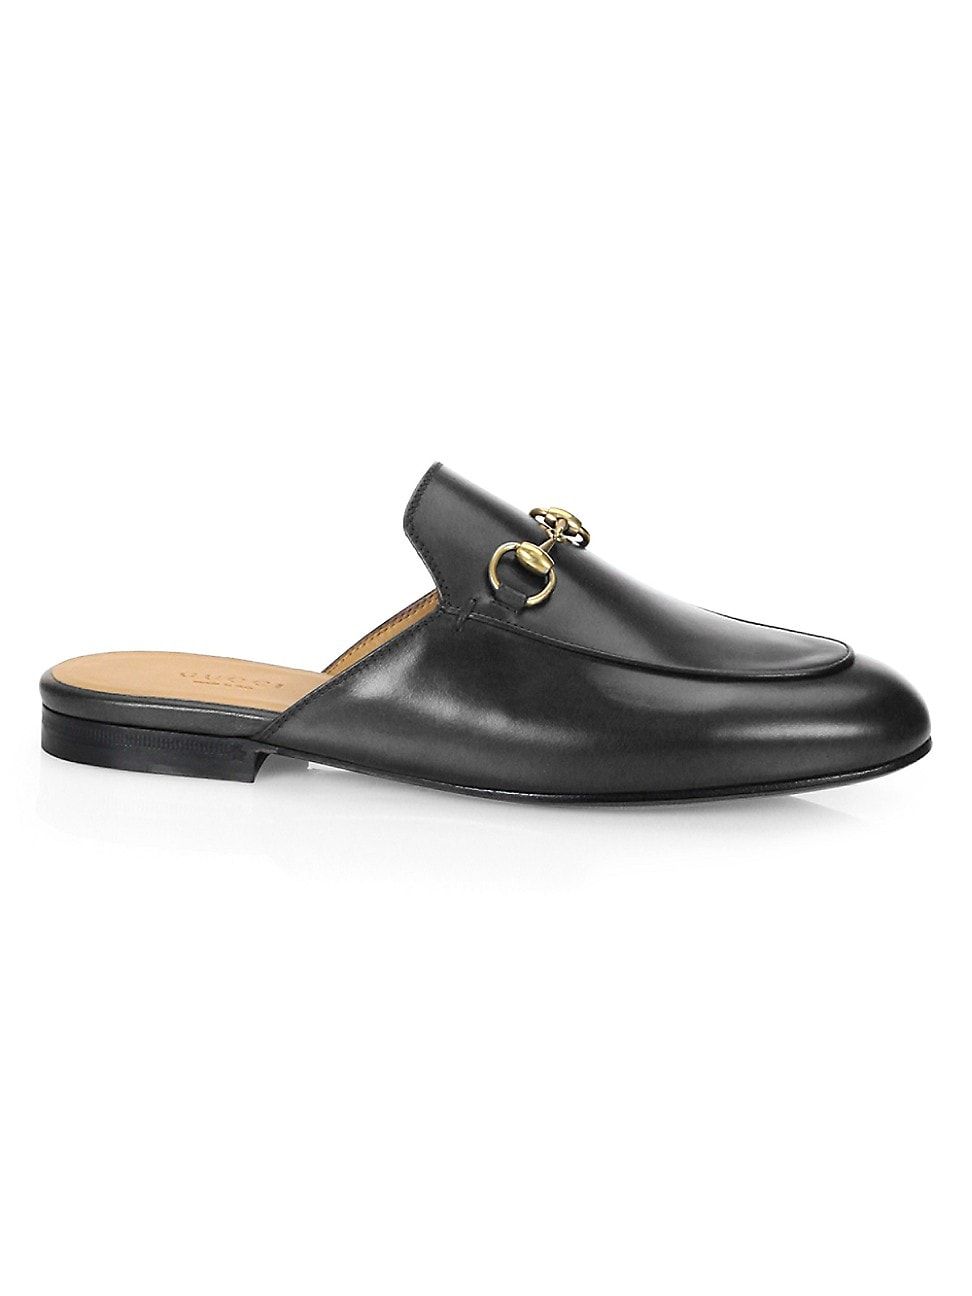 Women's Princetown Leather Slipper - Black - Size 8 | Saks Fifth Avenue